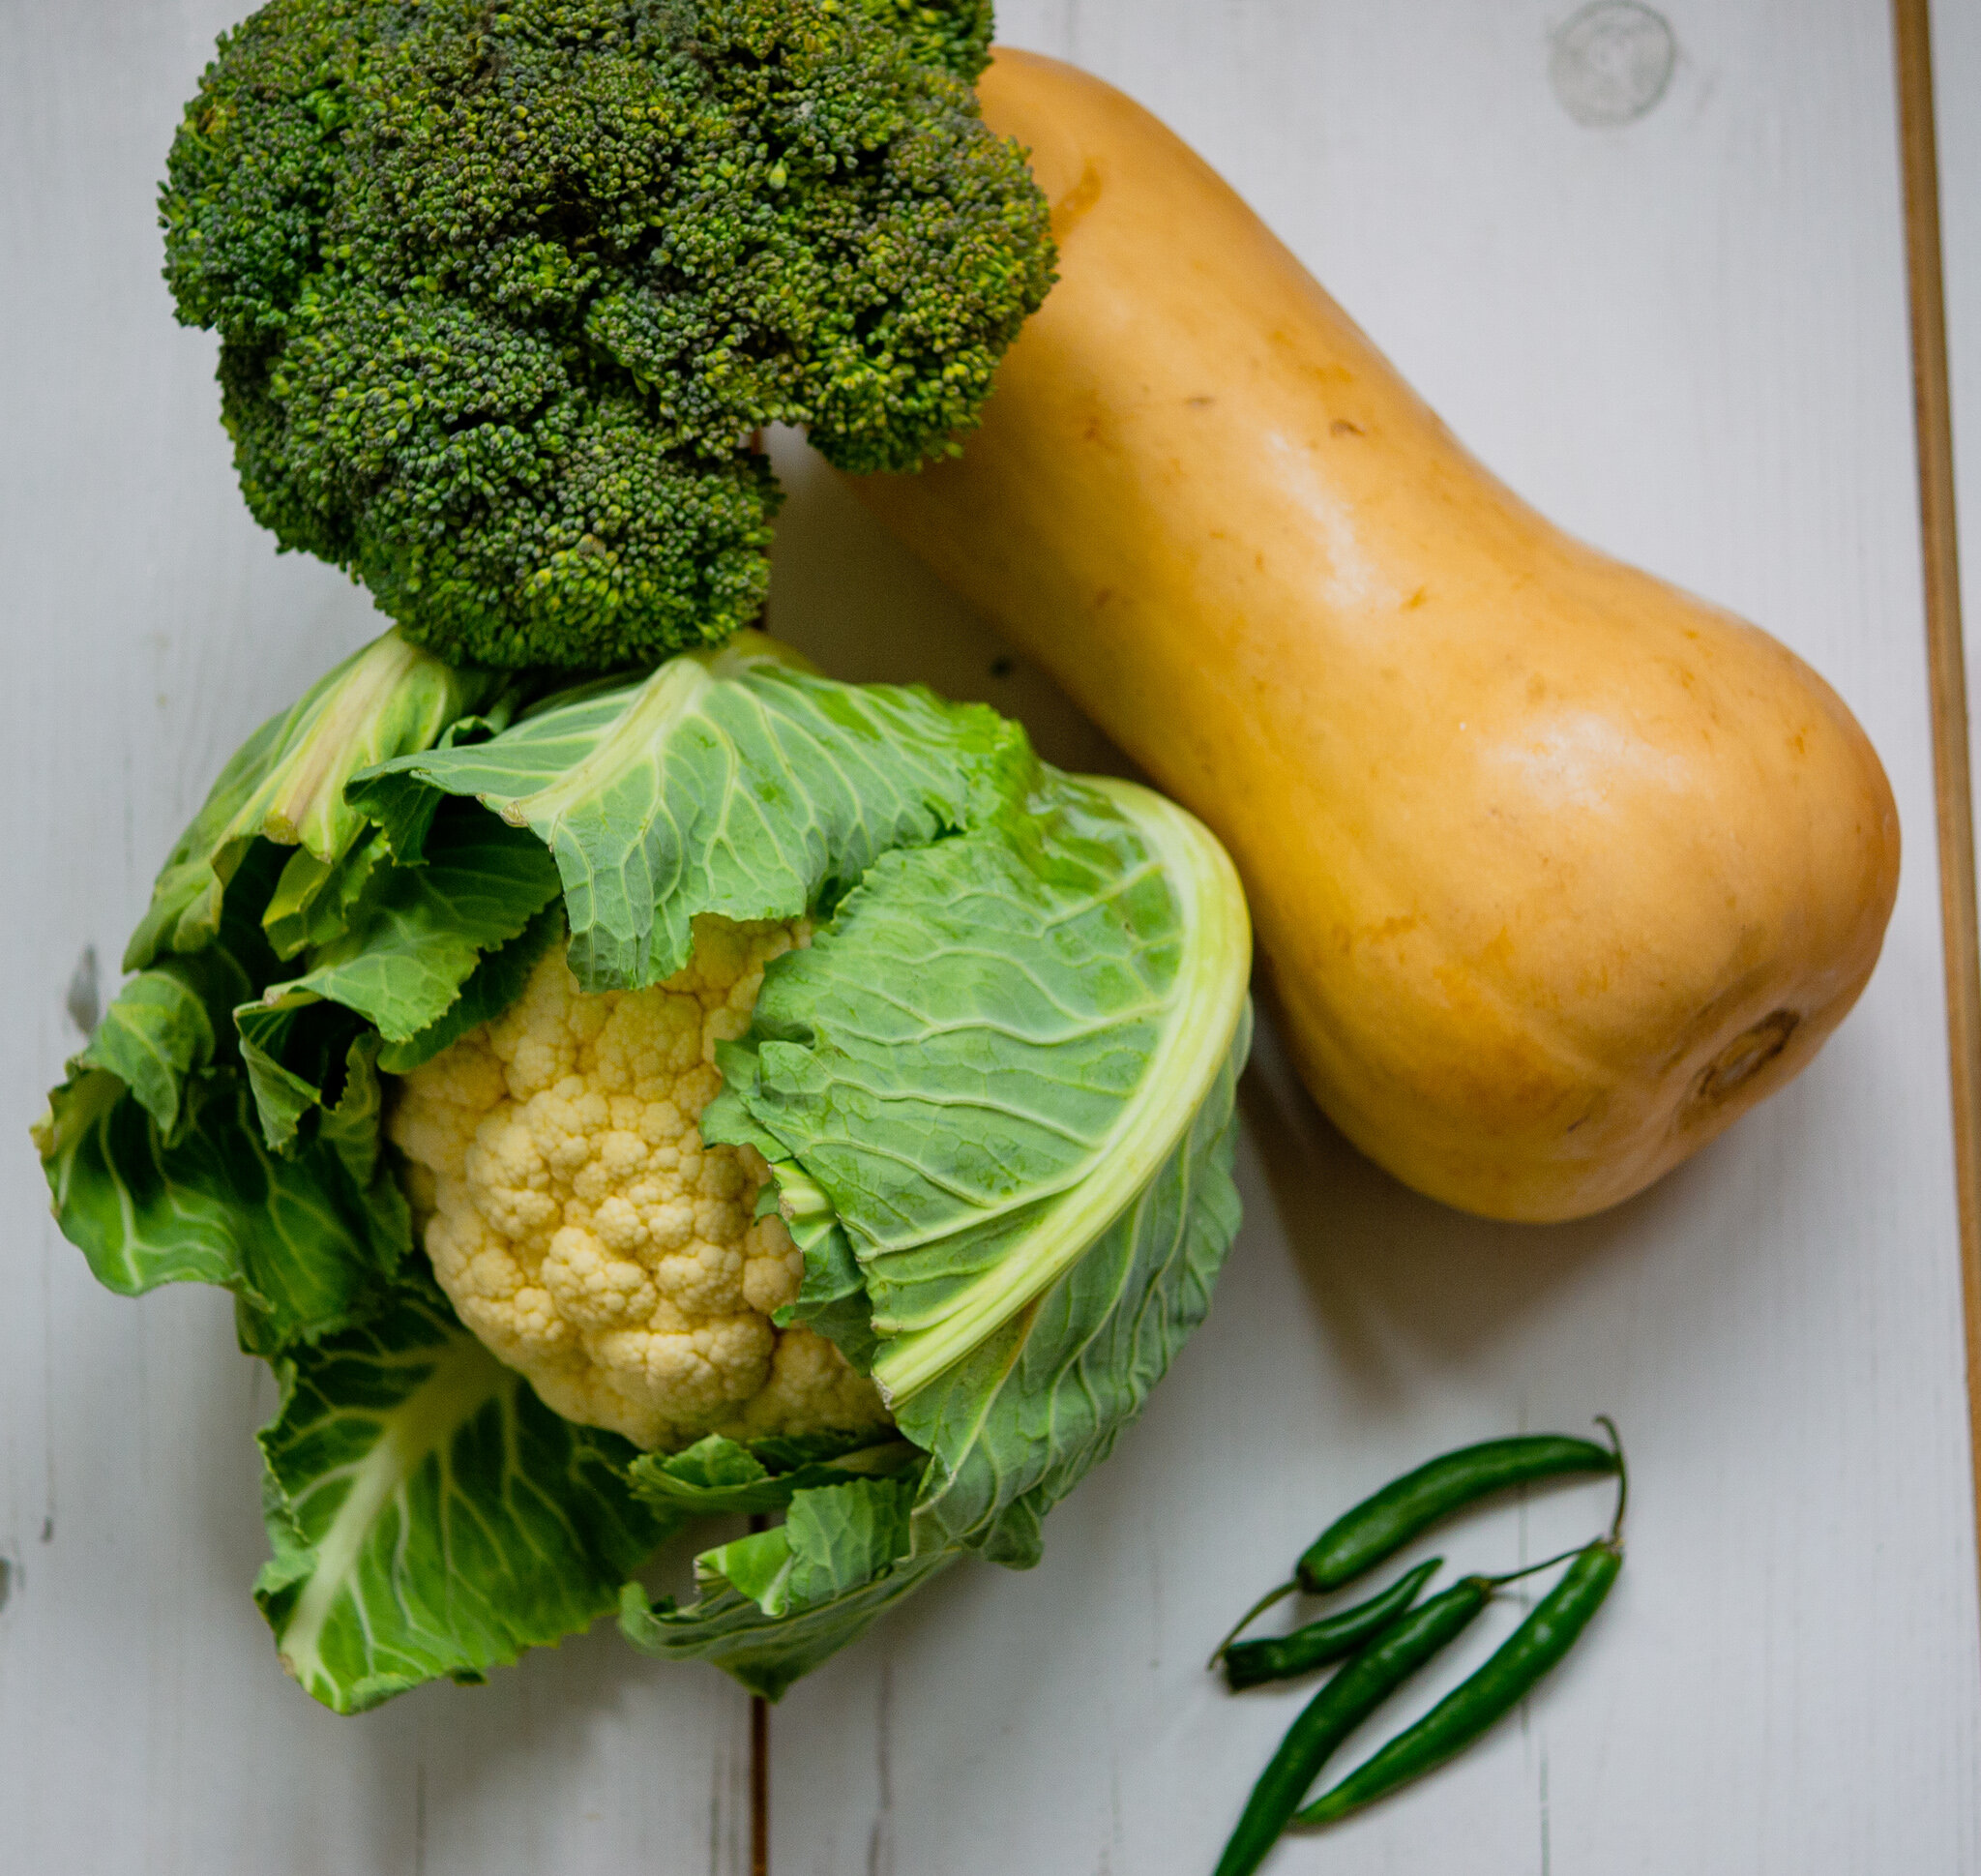 roasted broccoli and cauliflower kam sokhi allergy chef